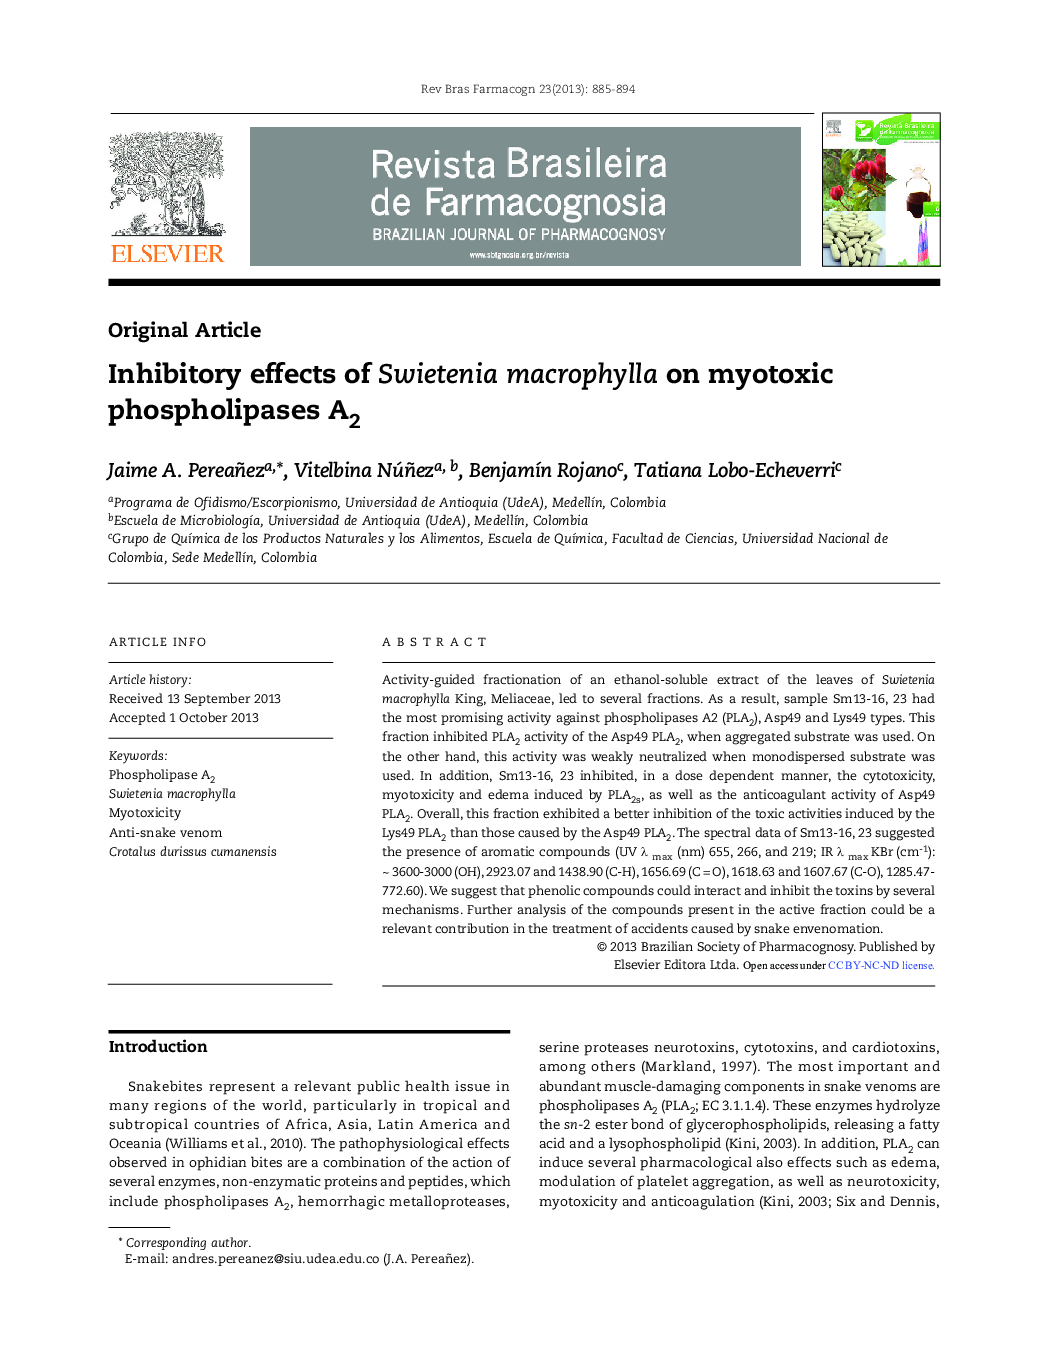 Inhibitory effects of Swietenia macrophylla on myotoxic phospholipases A2